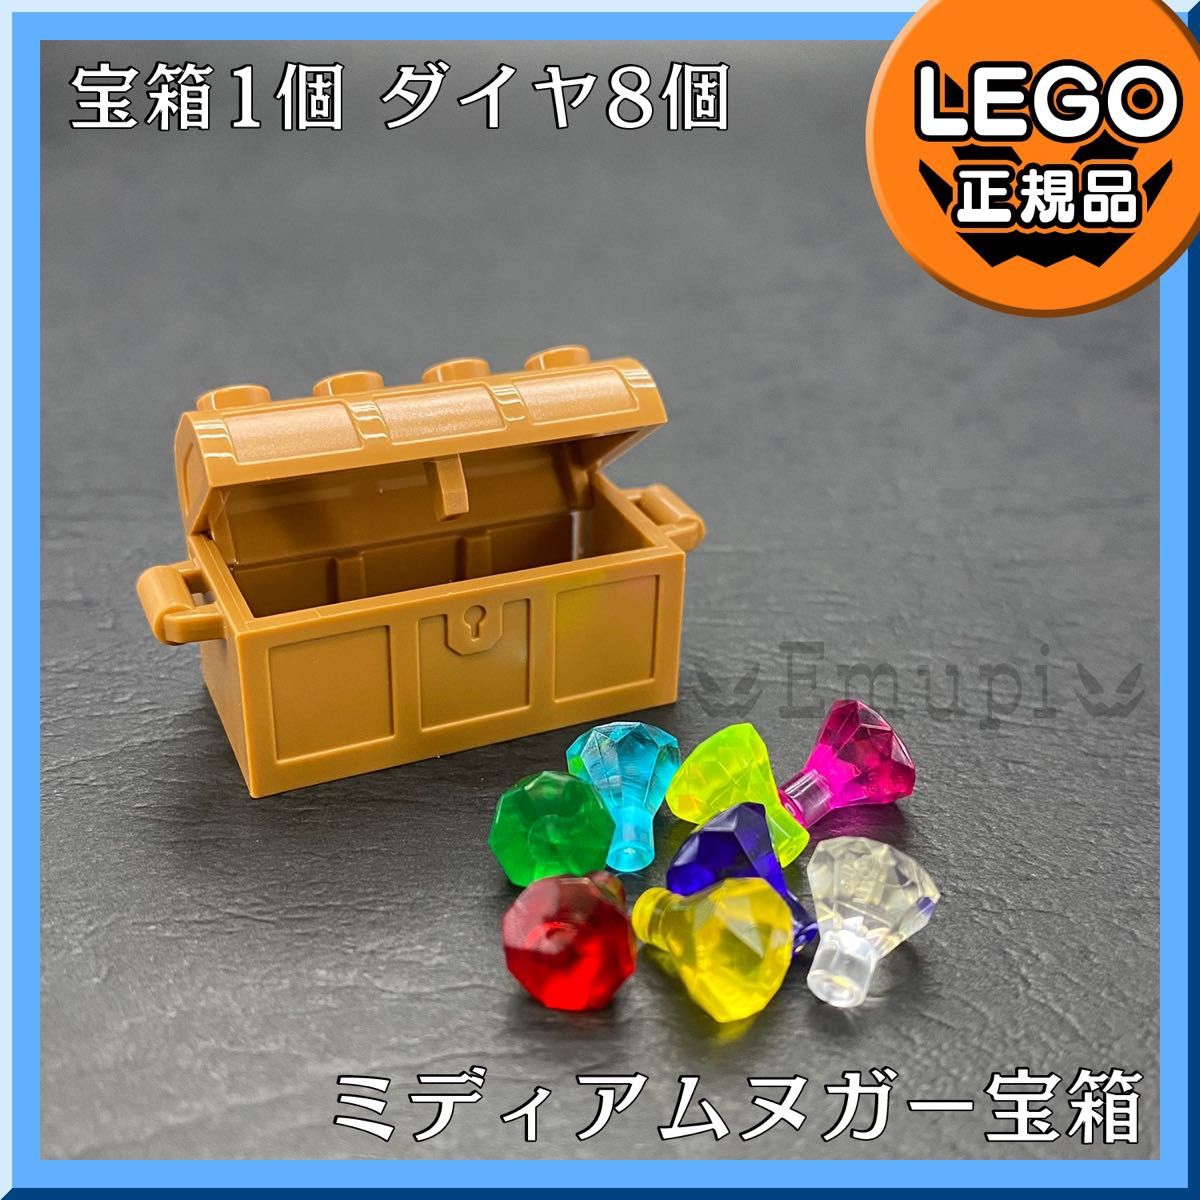 LEGO 春のセール ミディアムヌガー宝箱 宝石 ダイヤ8色8個セット